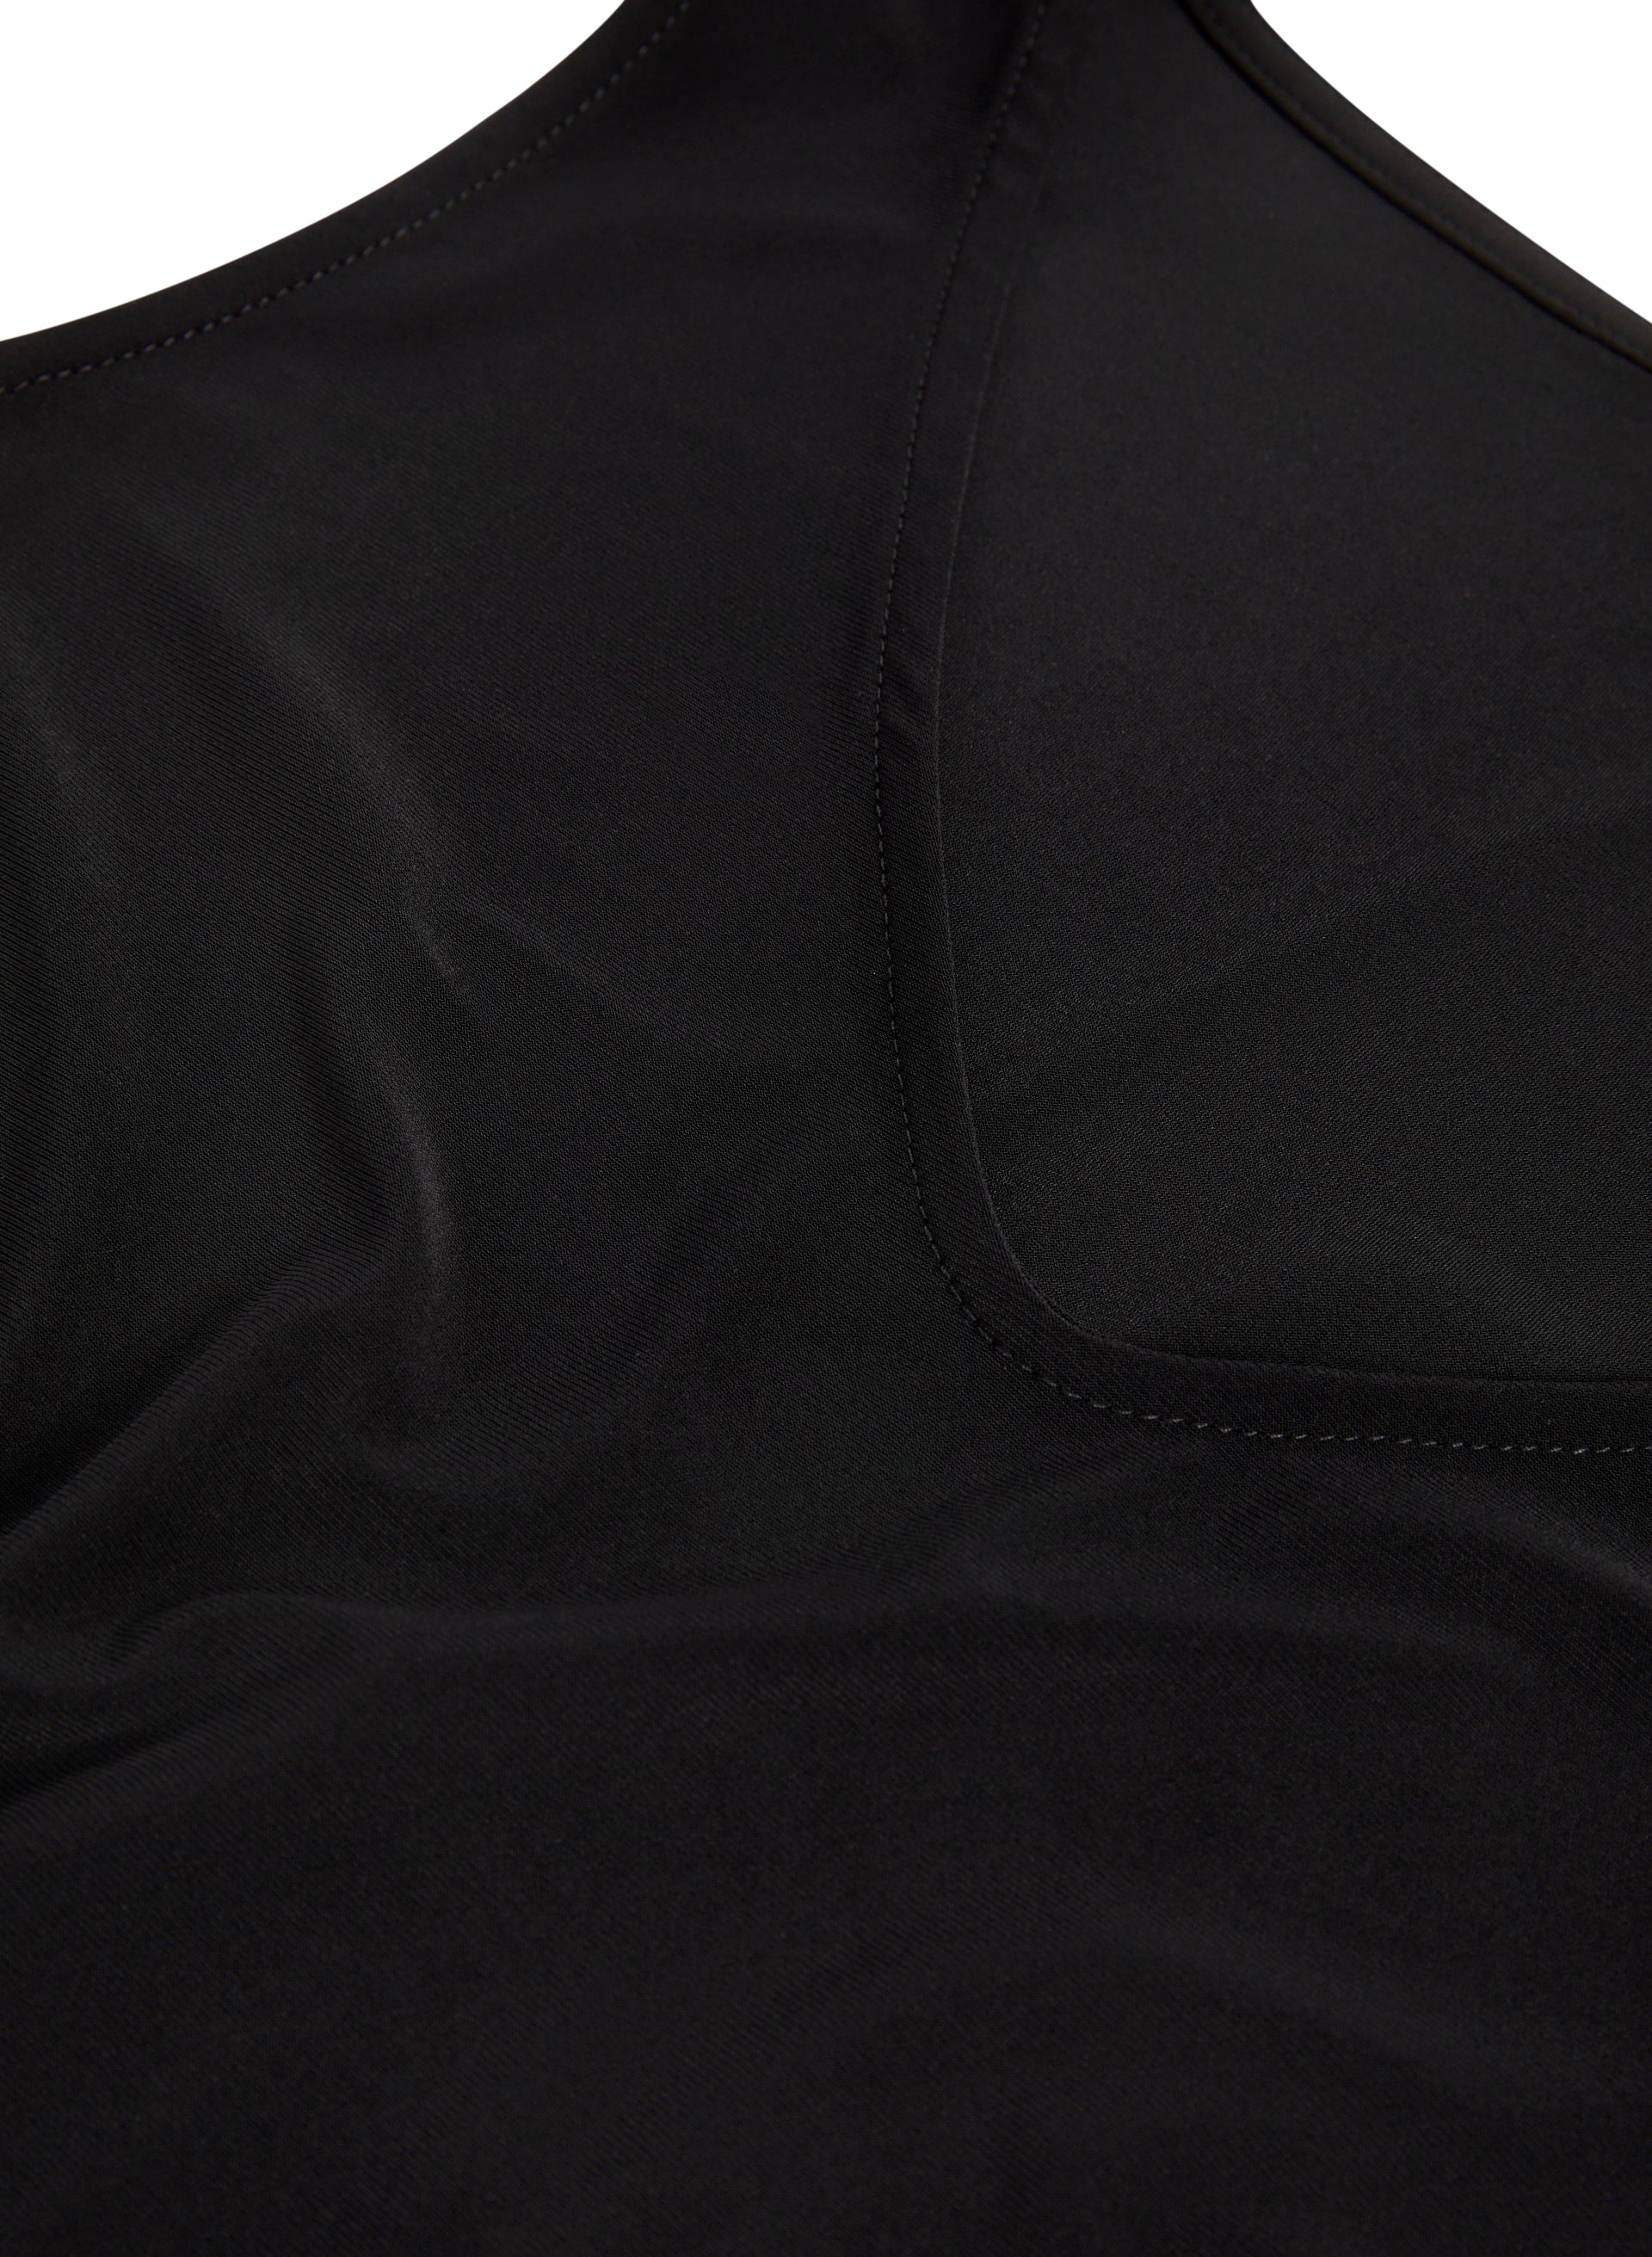 Douhoow Women PU Leather Vest Halter Neck Waistcoat V Neck Sleeveless  Button Tank Tops